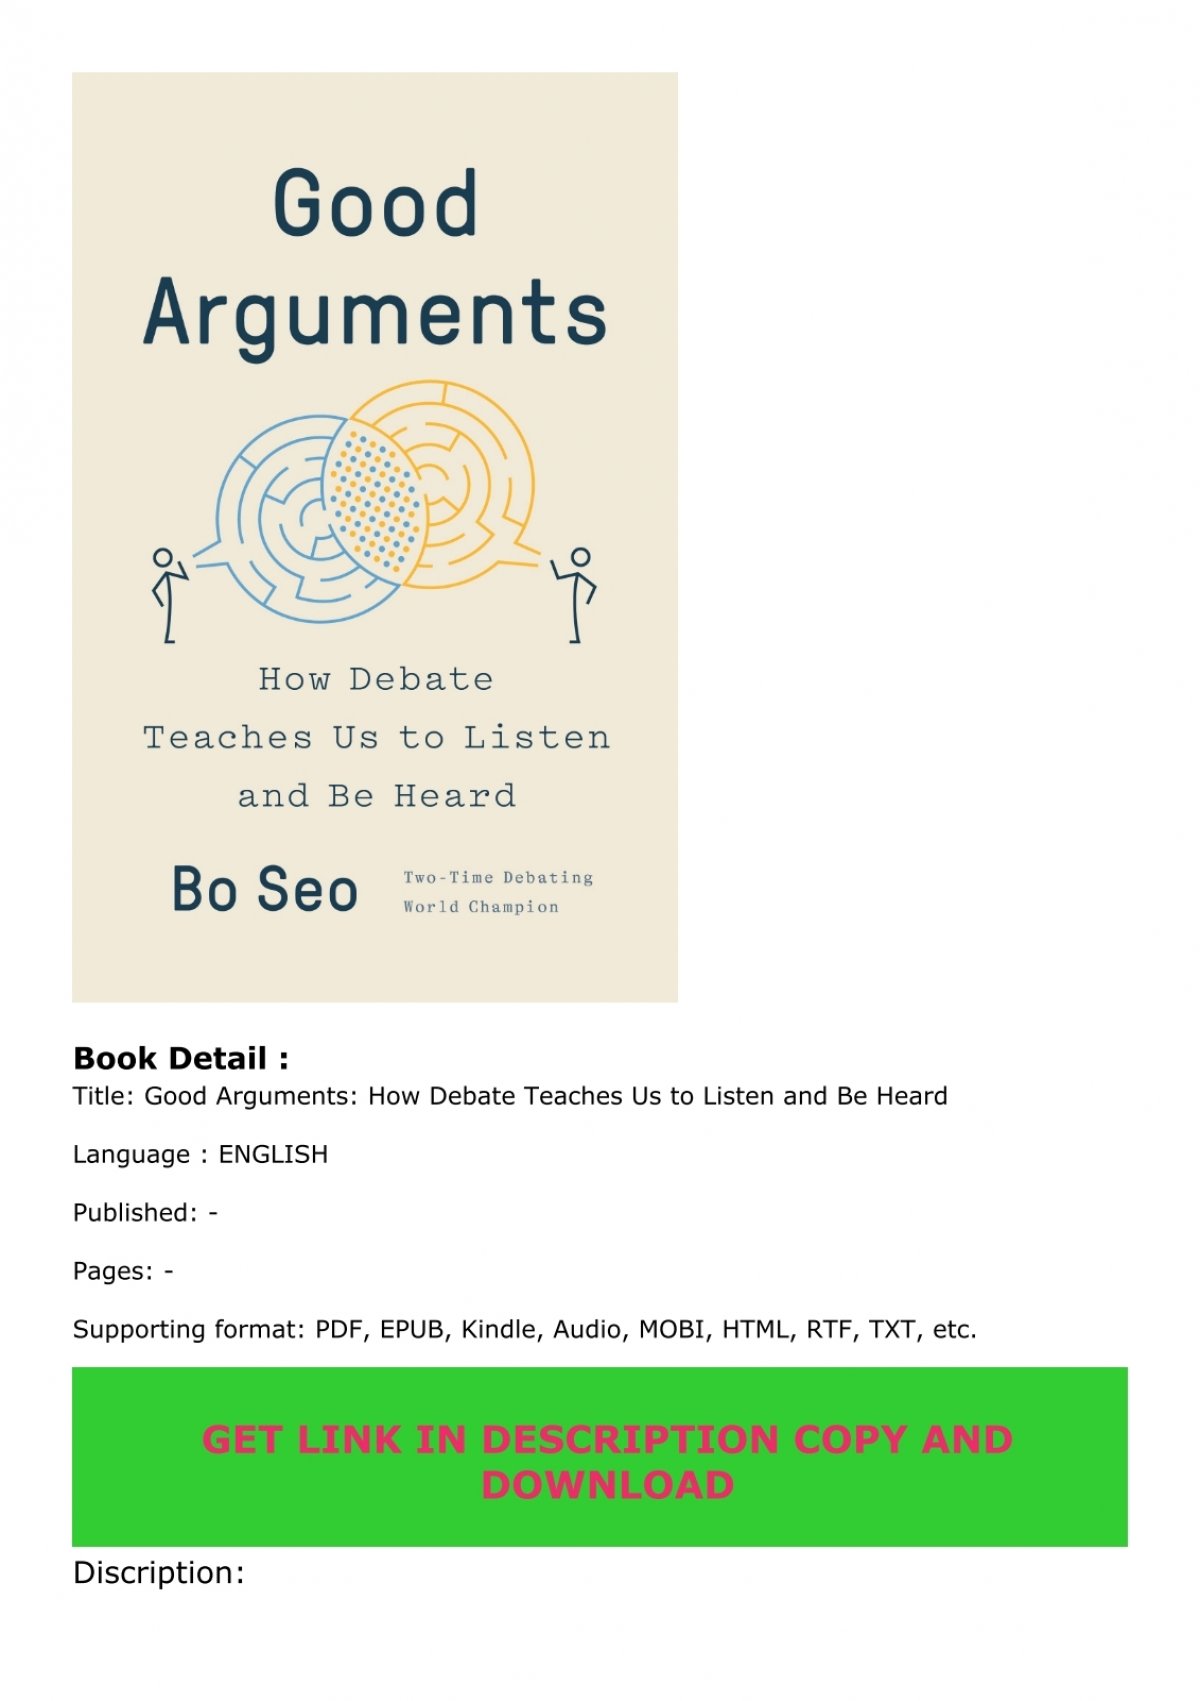 good arguments book review